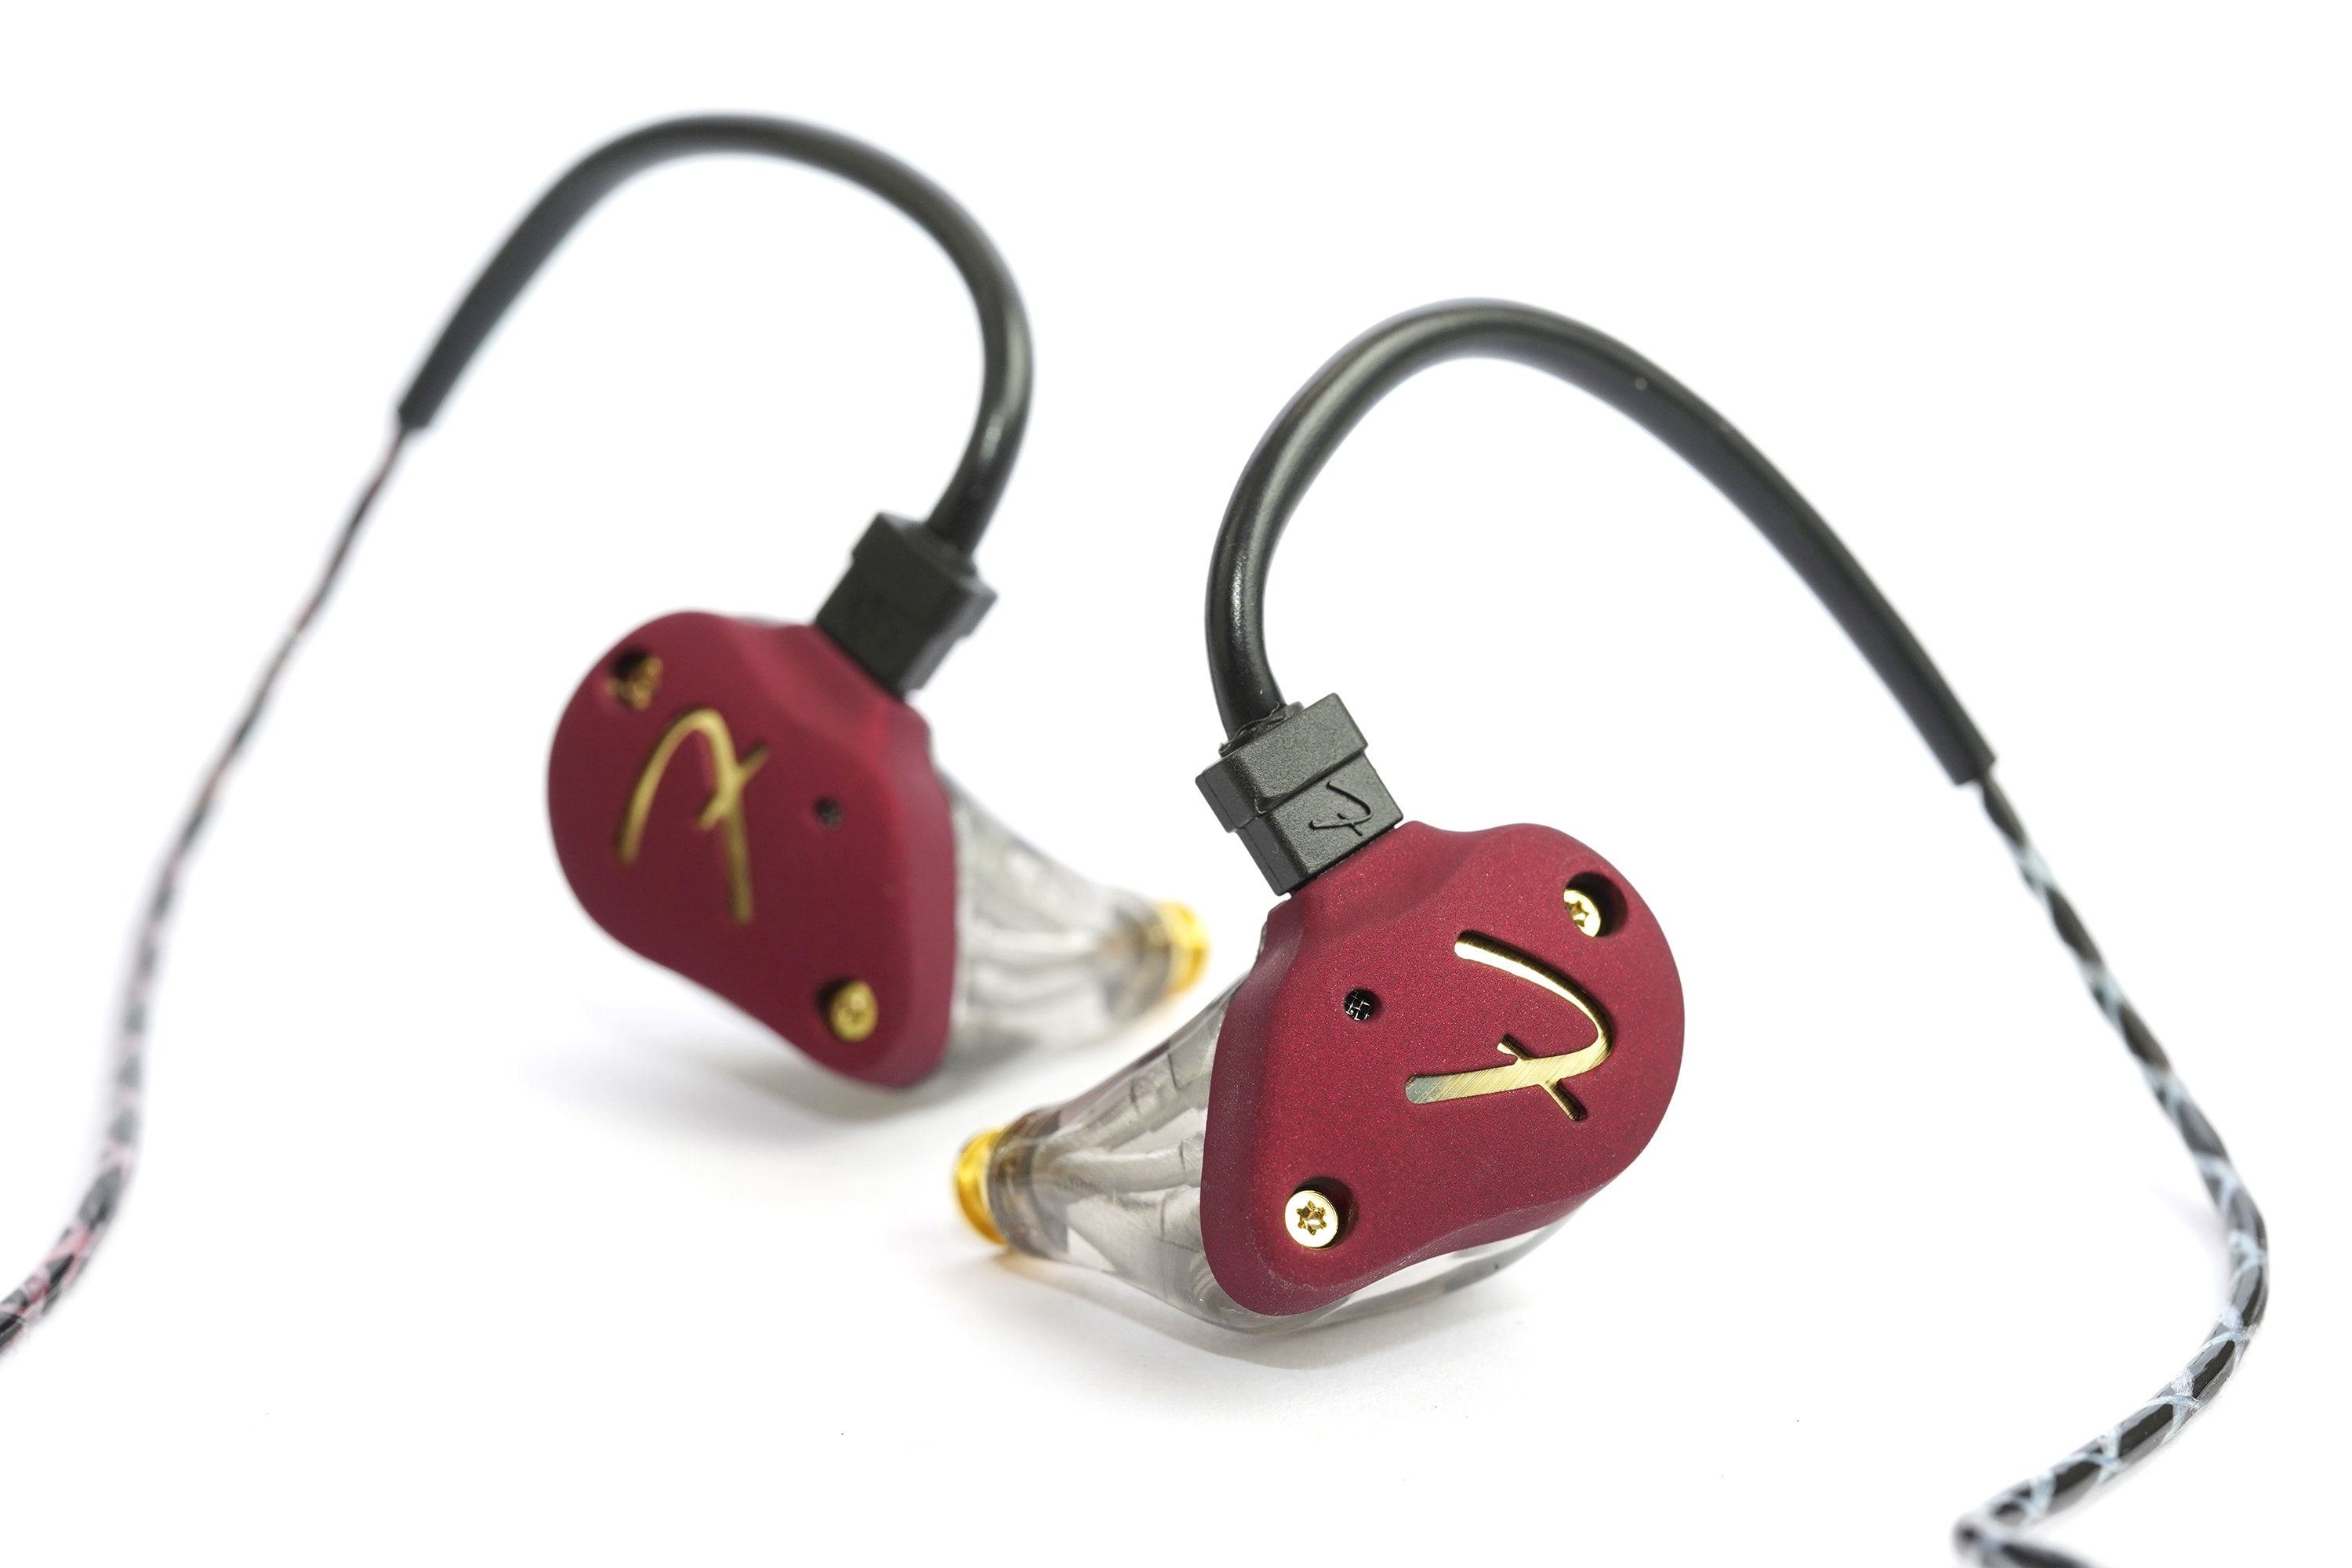 Fender Audio Design Lab 耳機系列迎來 Ten 2 新成員